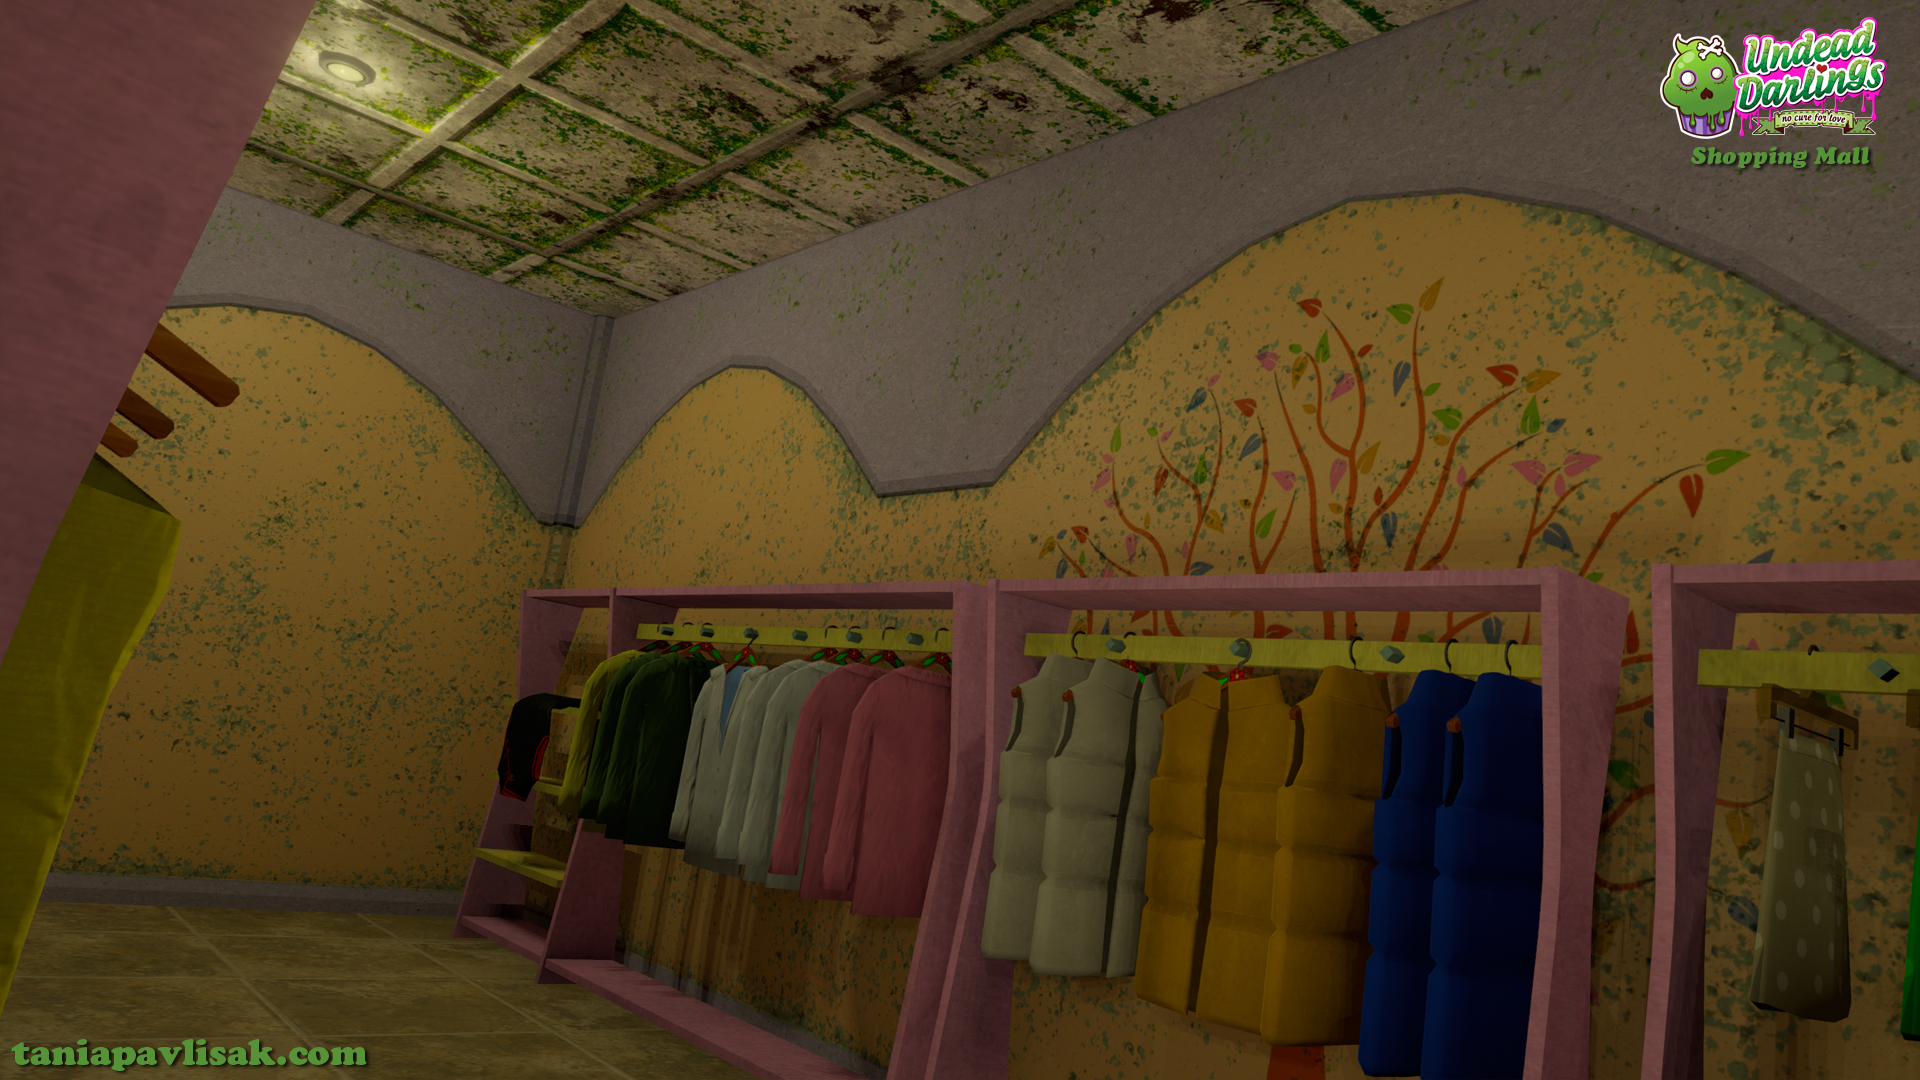 Clothing store interior